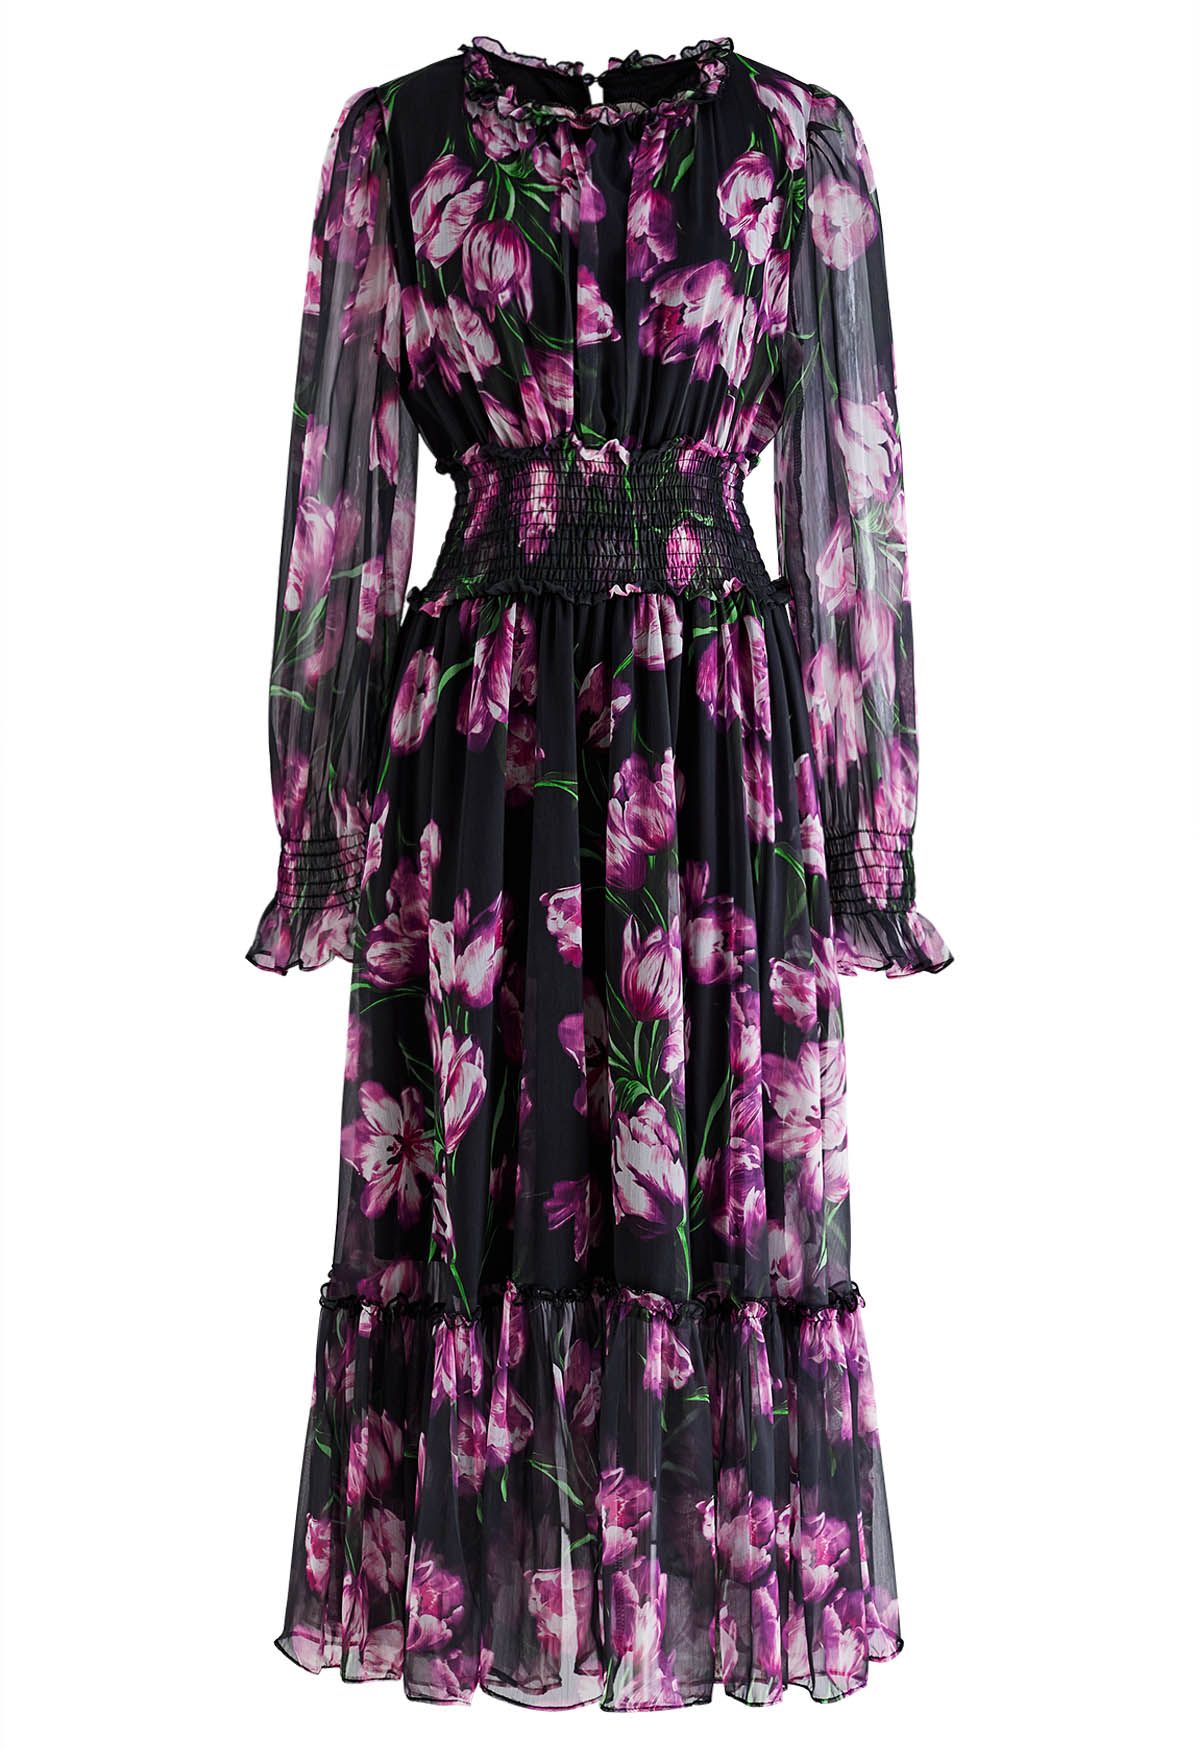 Violet Floral Shirred Waist Chiffon Dress - Retro, Indie and Unique Fashion